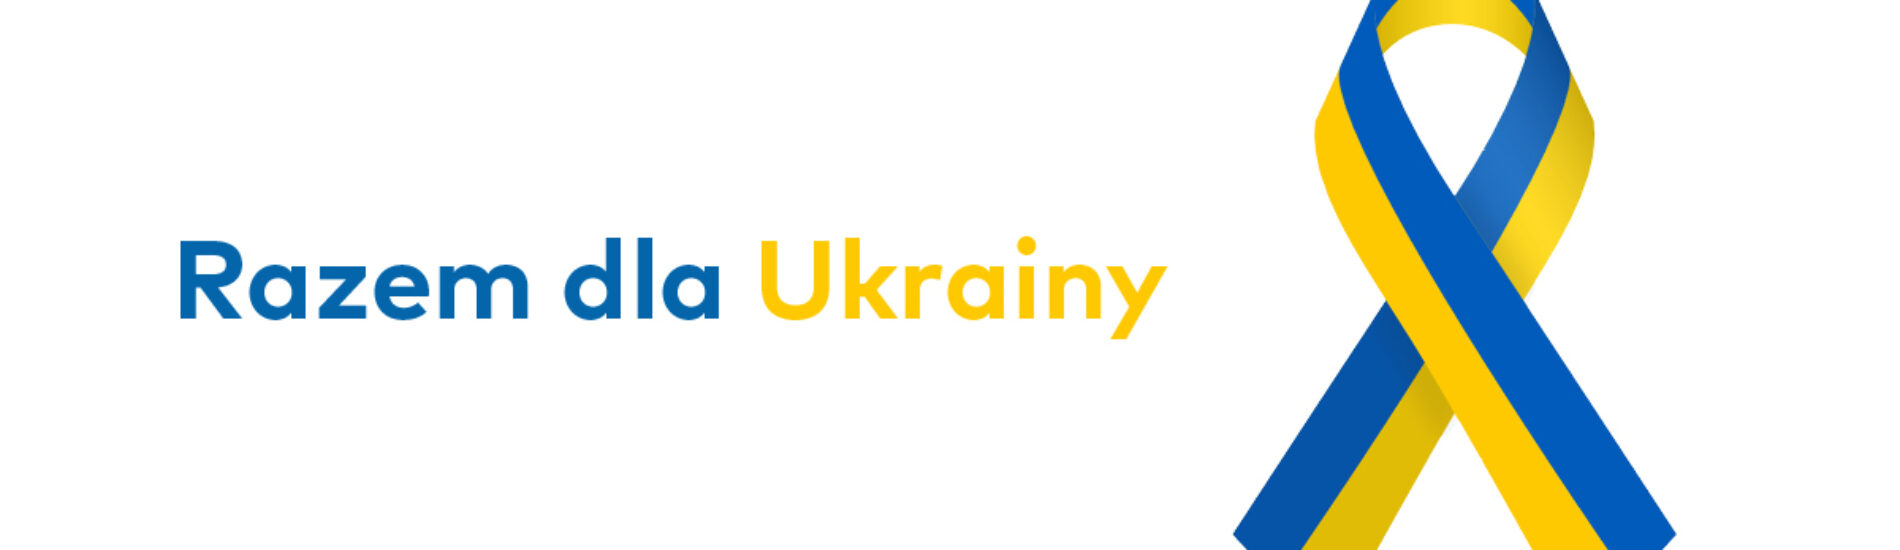 Razem dla Ukrainy